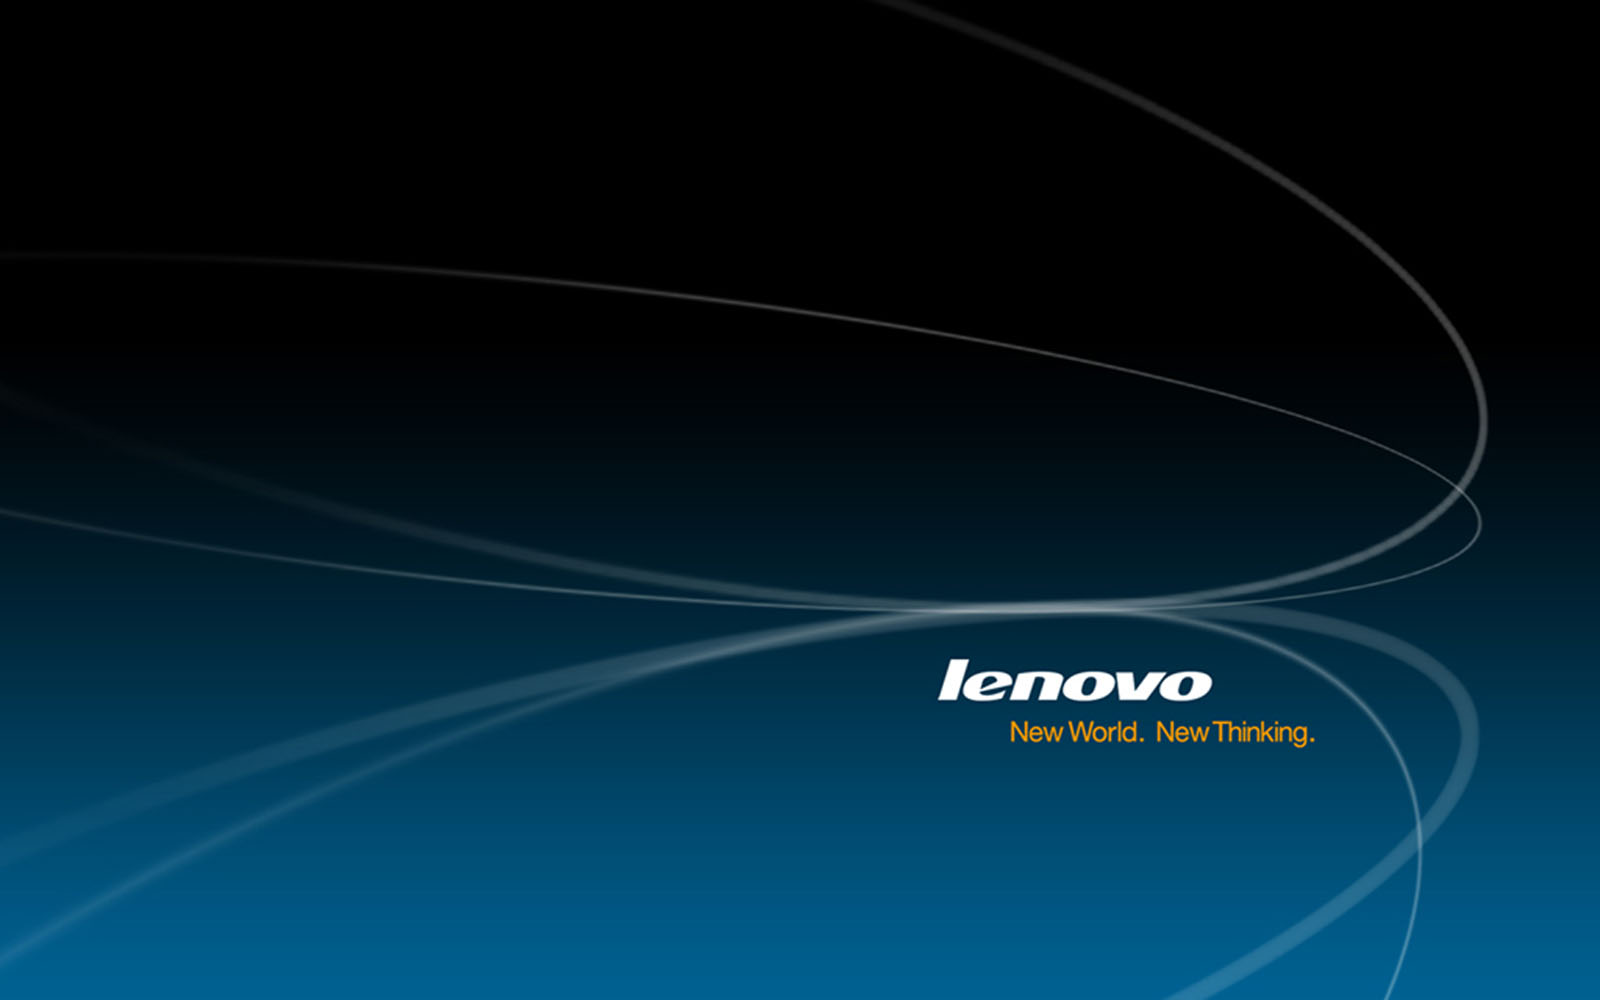  Lenovo Laptop Wallpapers Lenovo Laptop DesktopWallpapers Lenovo